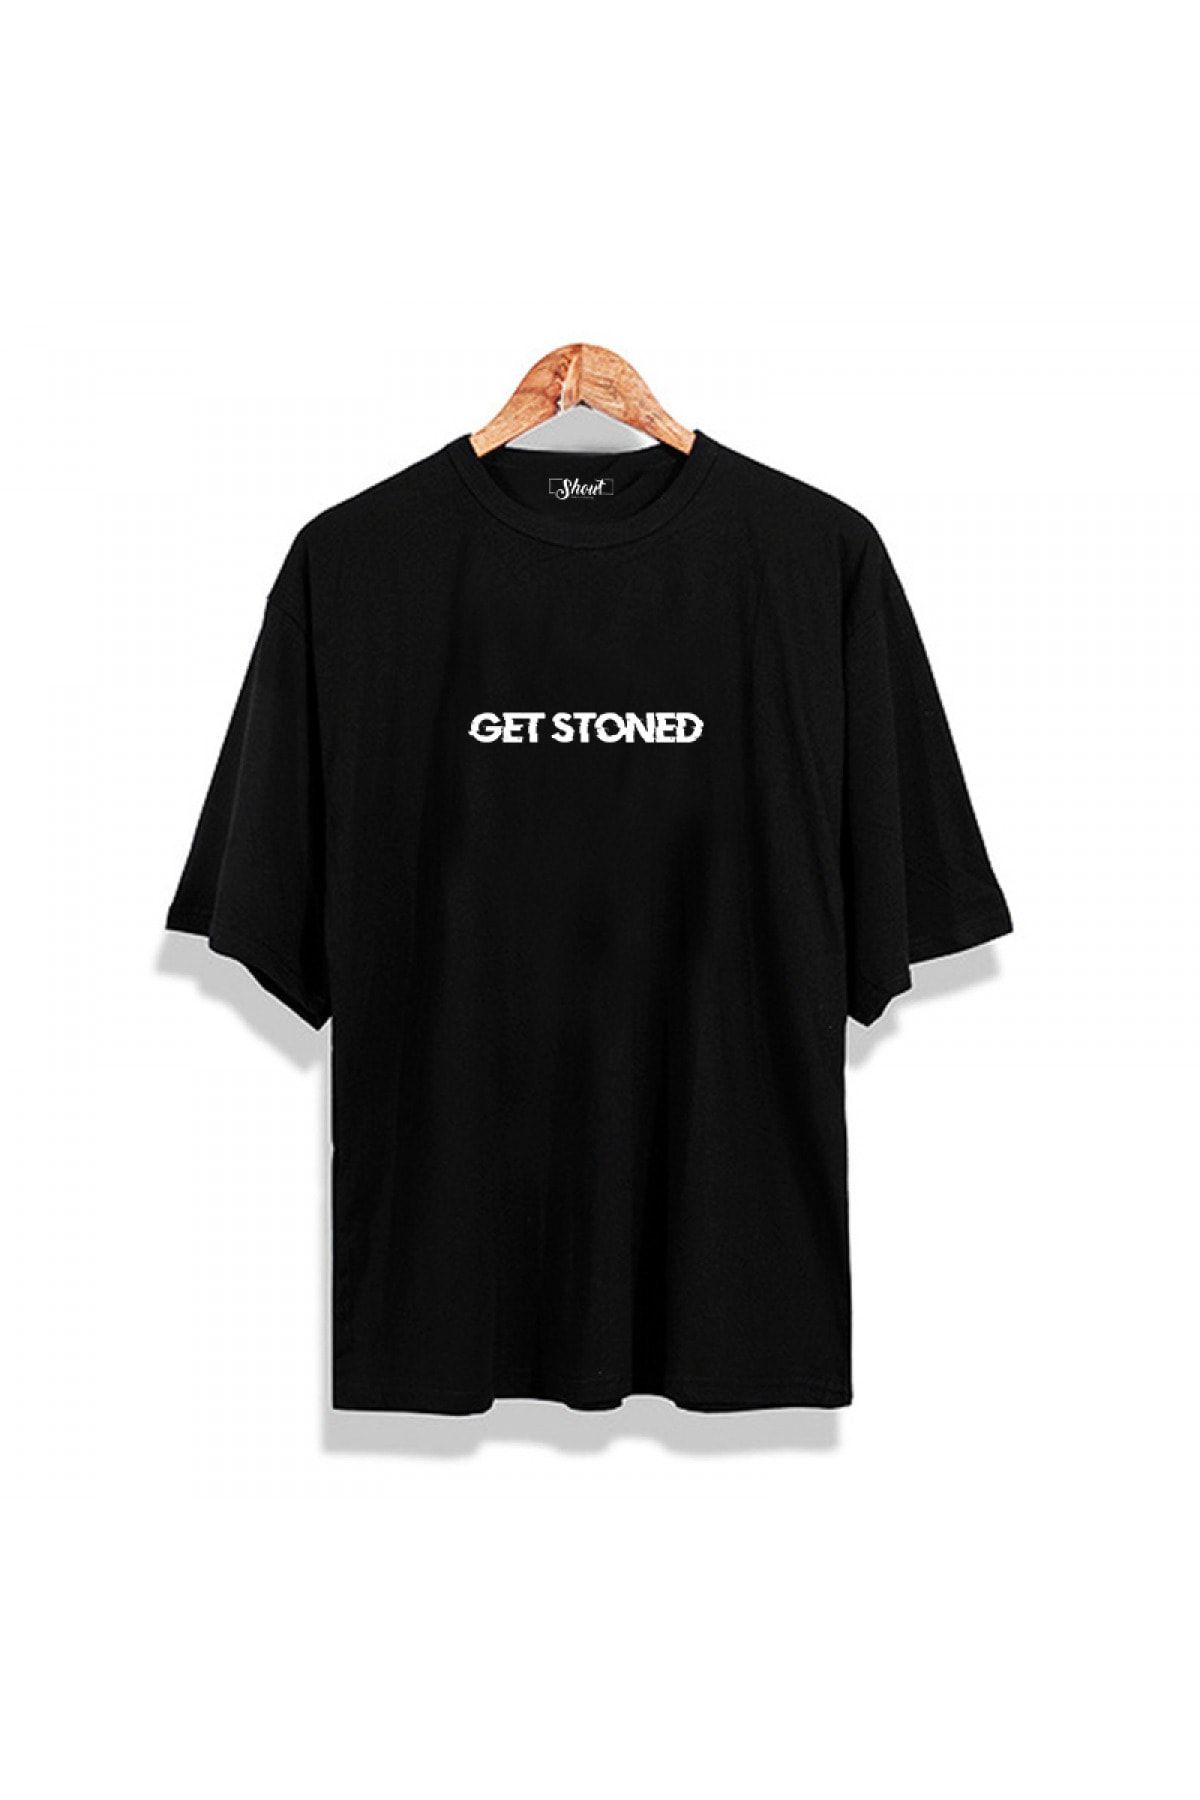 Shout Erkek Oversize Get Stoned Oldschool Unisex T-shirt